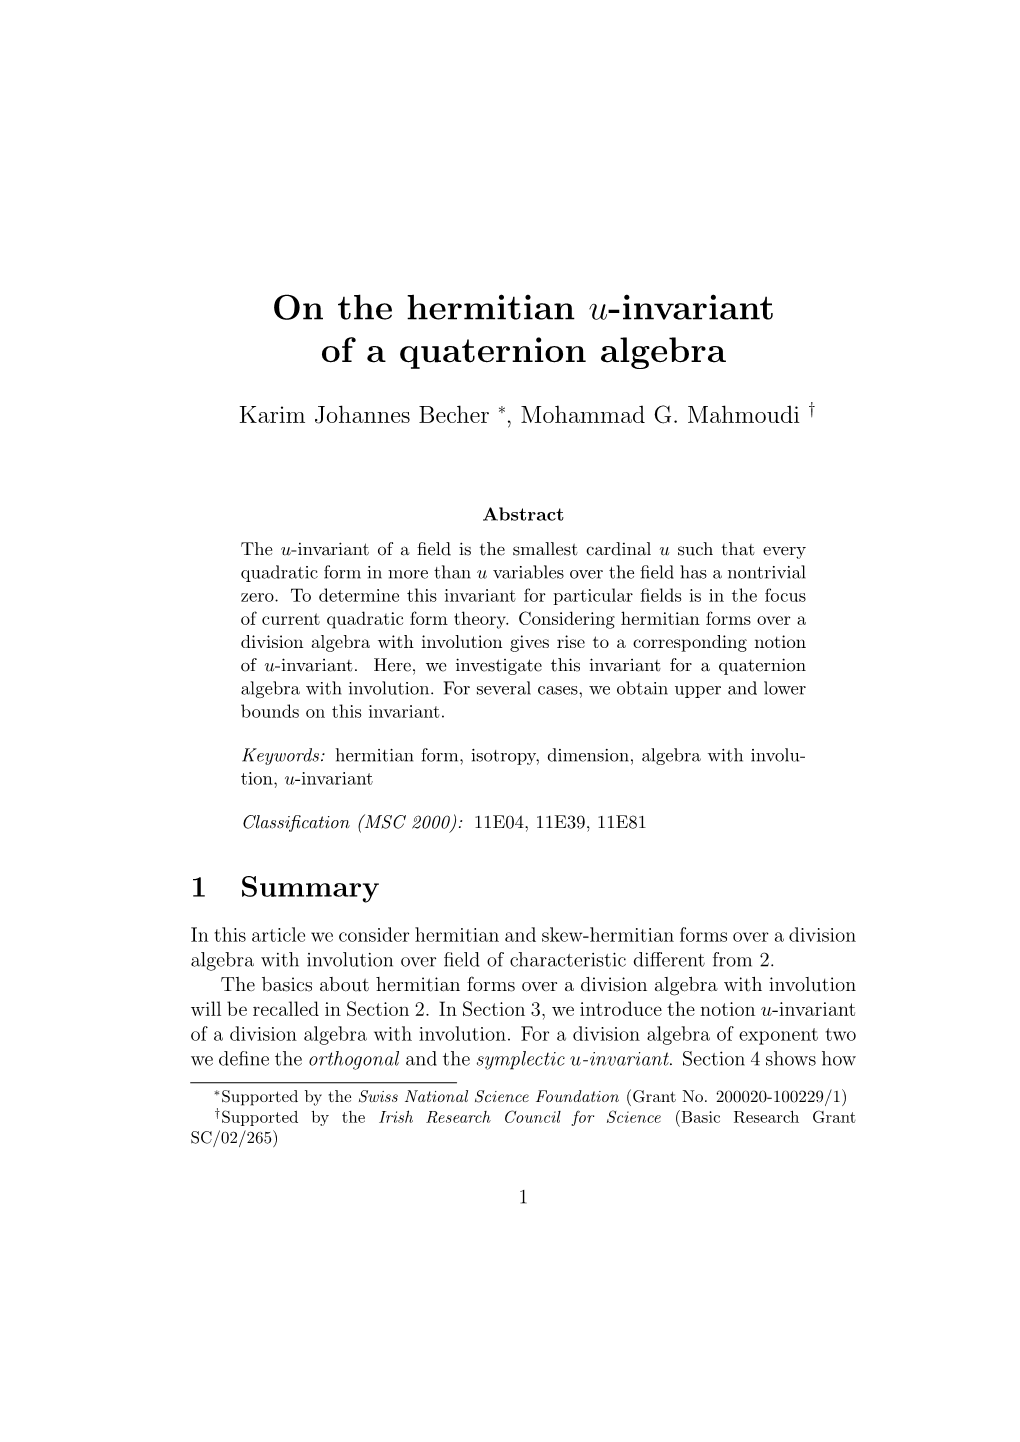 On the Hermitian U-Invariant of a Quaternion Algebra